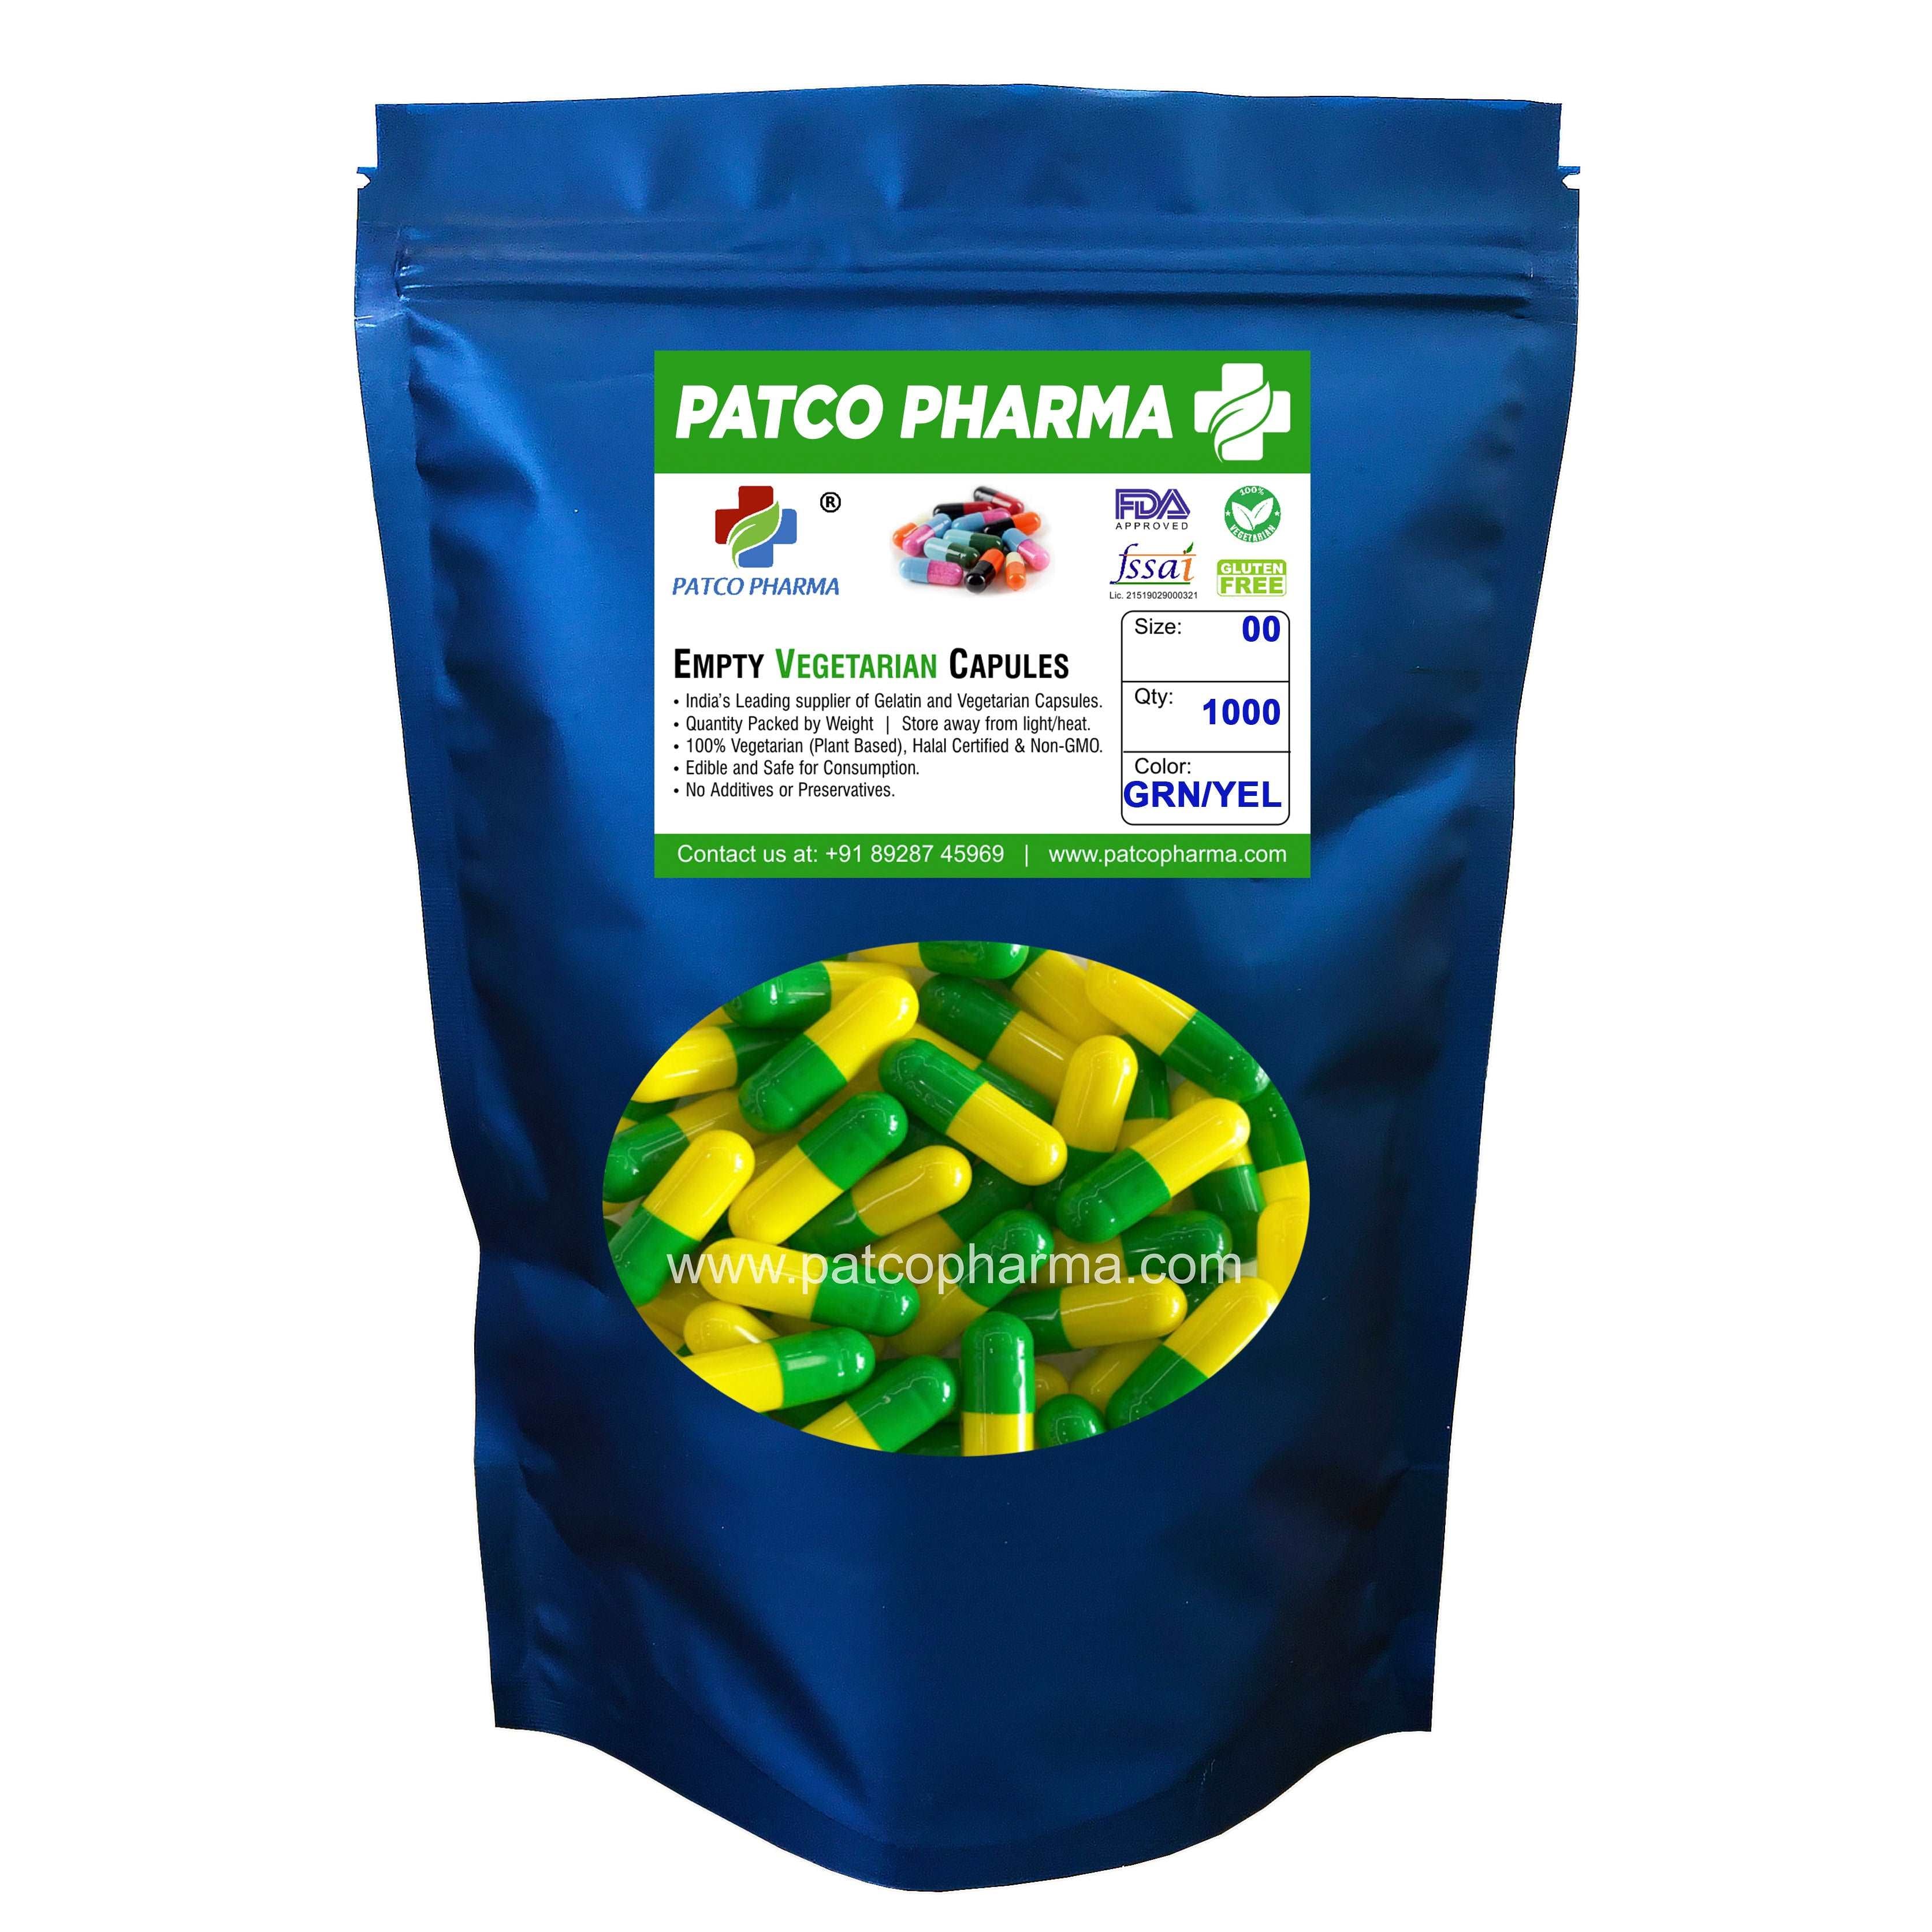 Empty Vegetarian Capsule - Size 00, Patco Pharma, HPMC capsules, empty-vegetarian-capsule-size-00, 1000 mg capsule, Size 00 Capsule, Vegetarian capsule, Patco Pharma